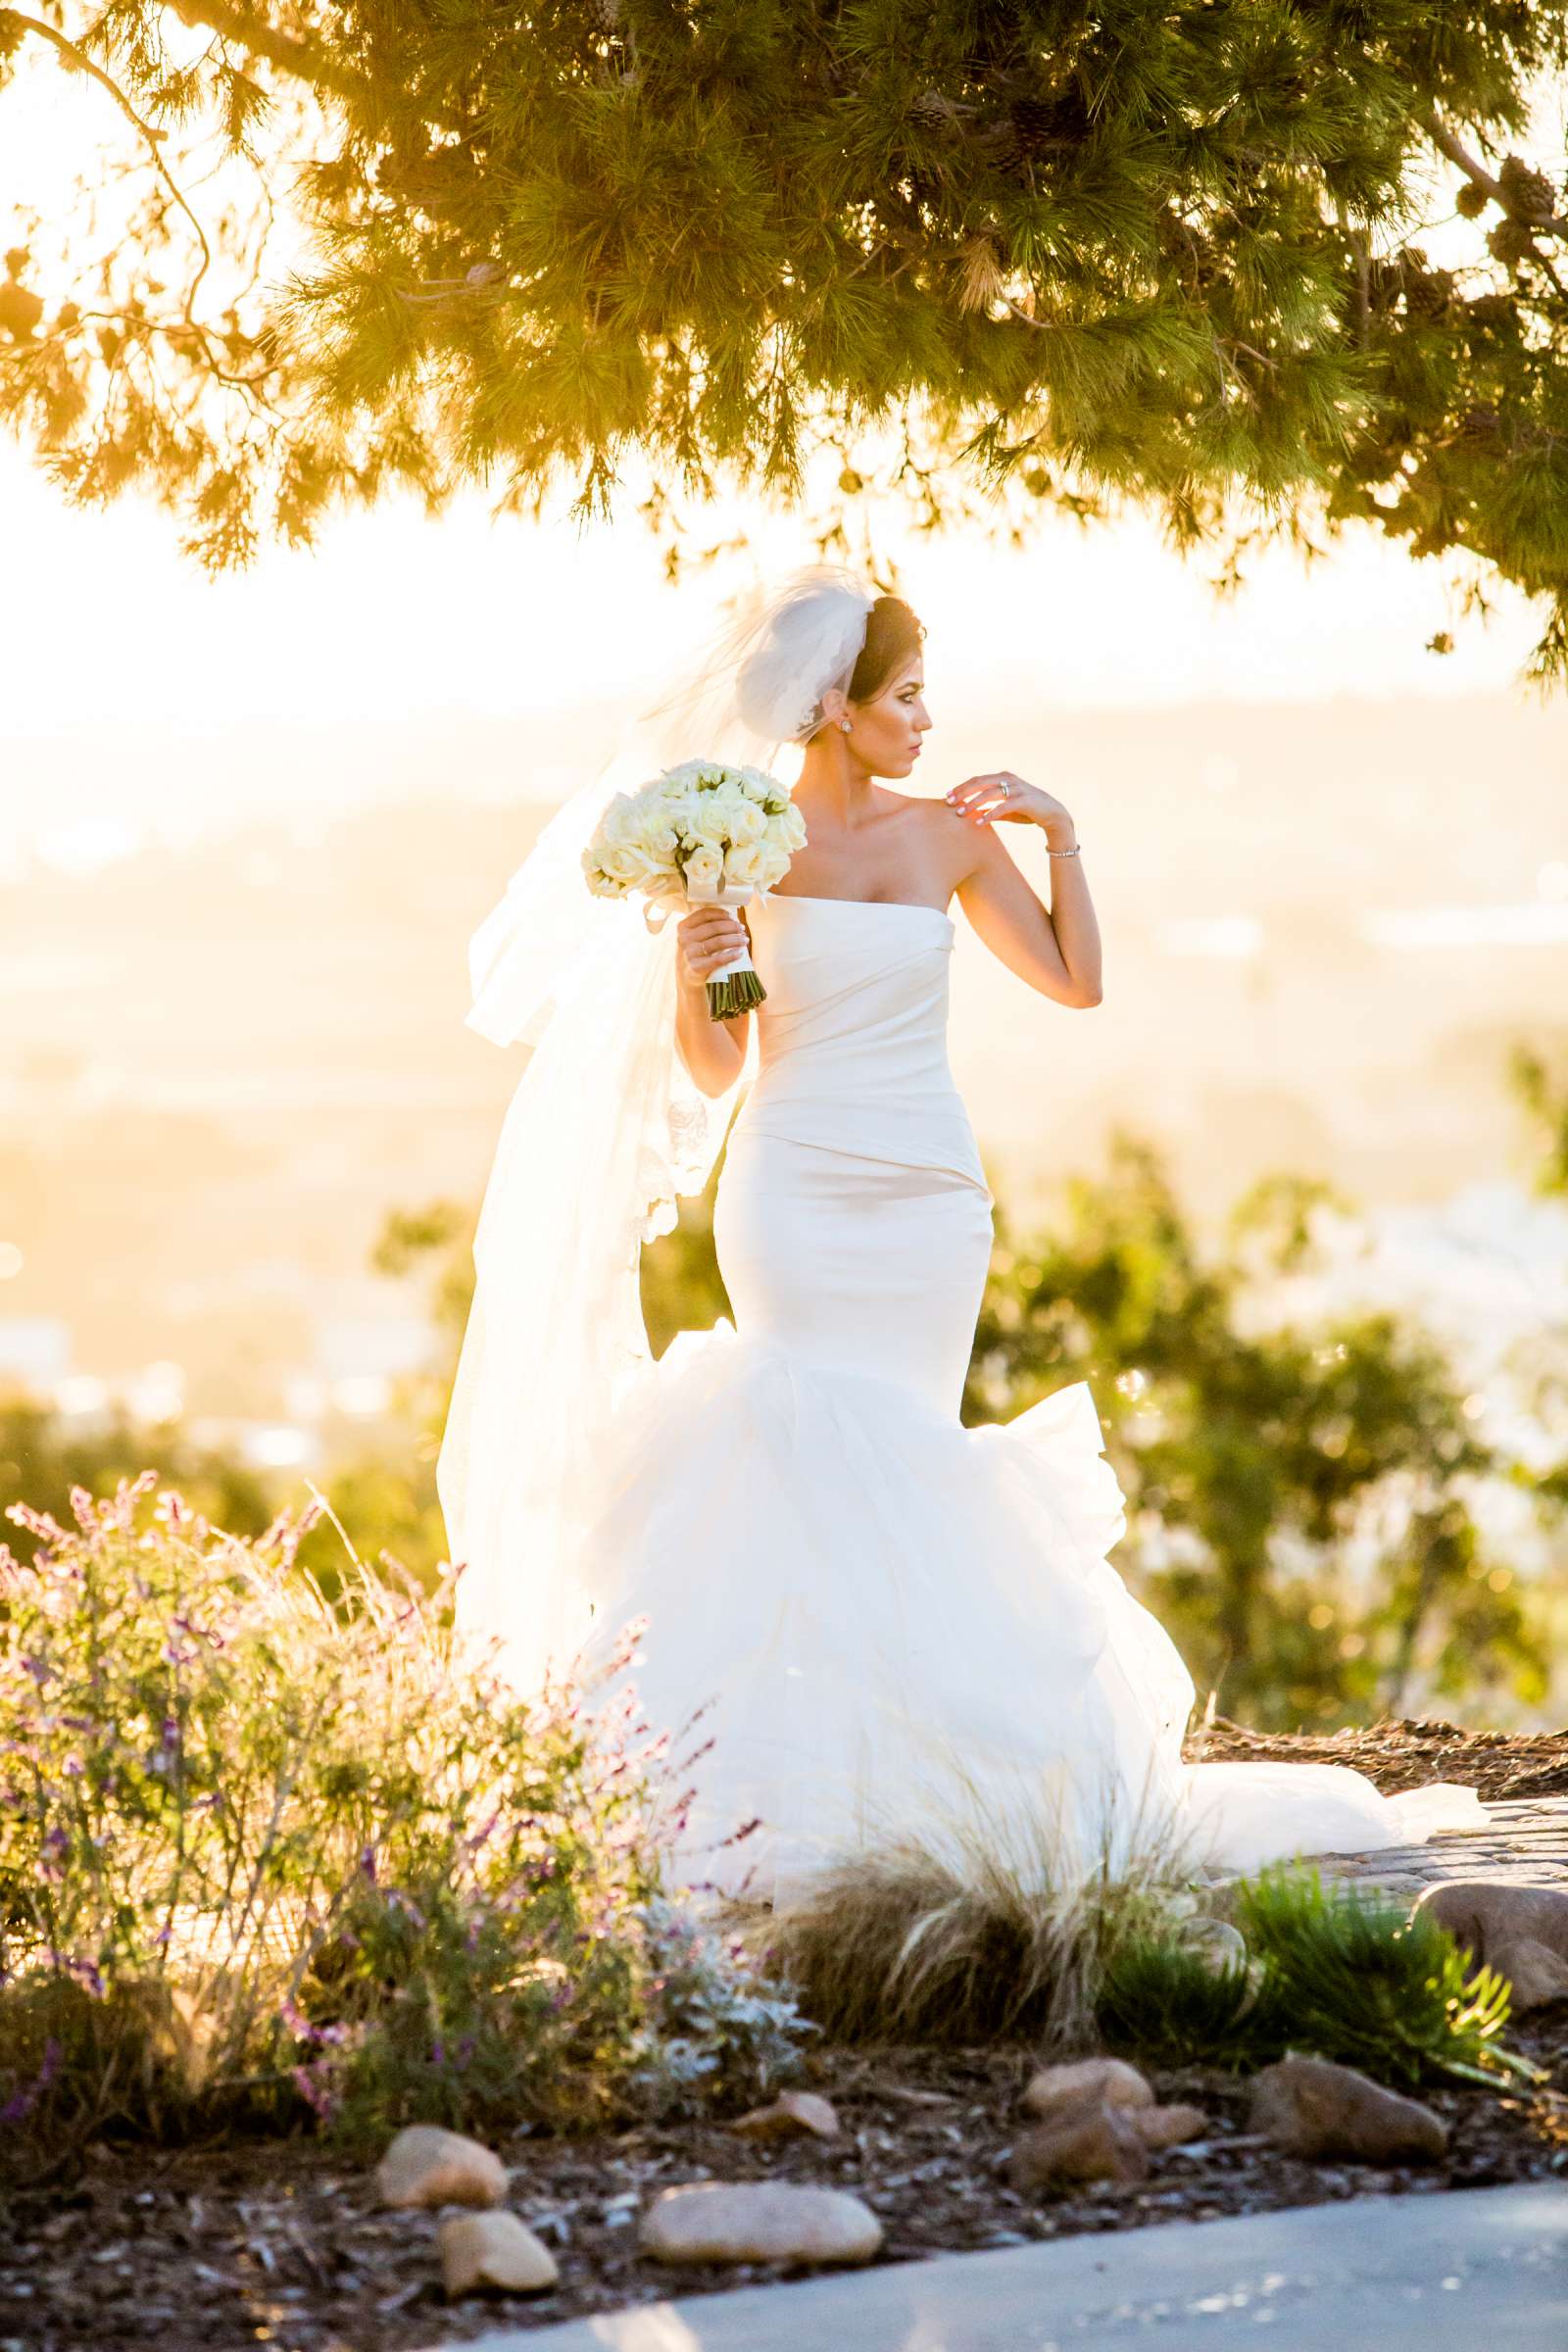 Hyatt Regency La Jolla Wedding, Kamar and Sean Wedding Photo #4 by True Photography